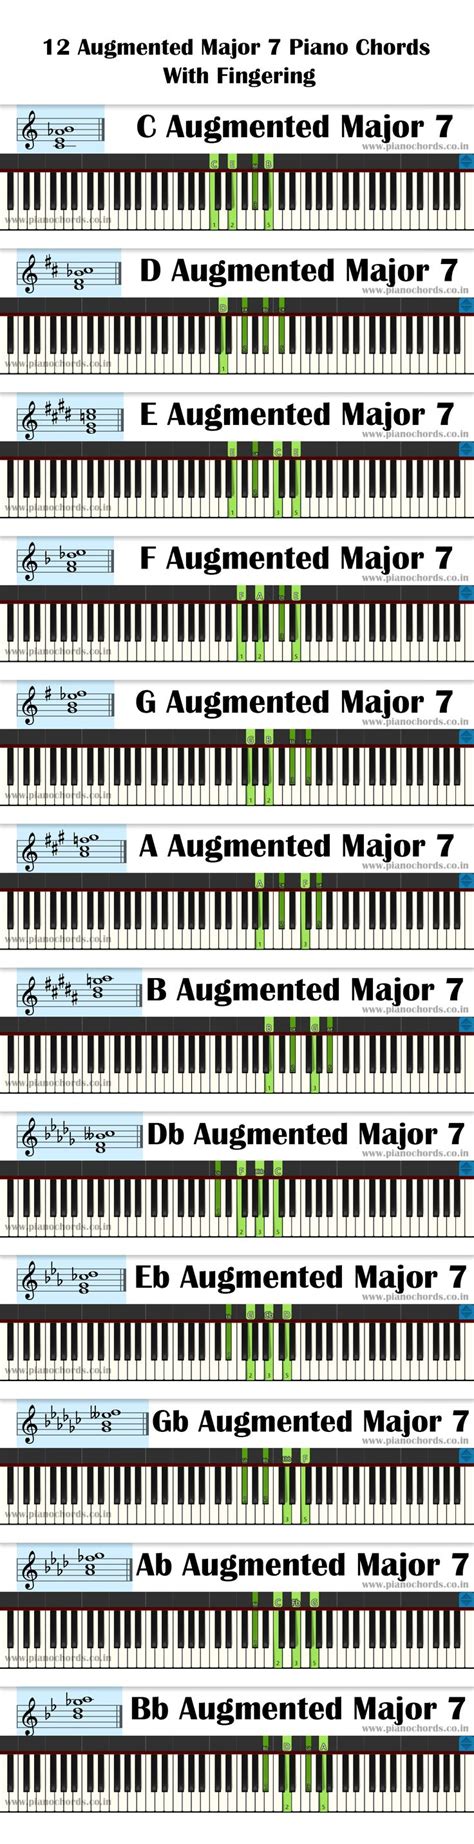 Pin On Piano Chords